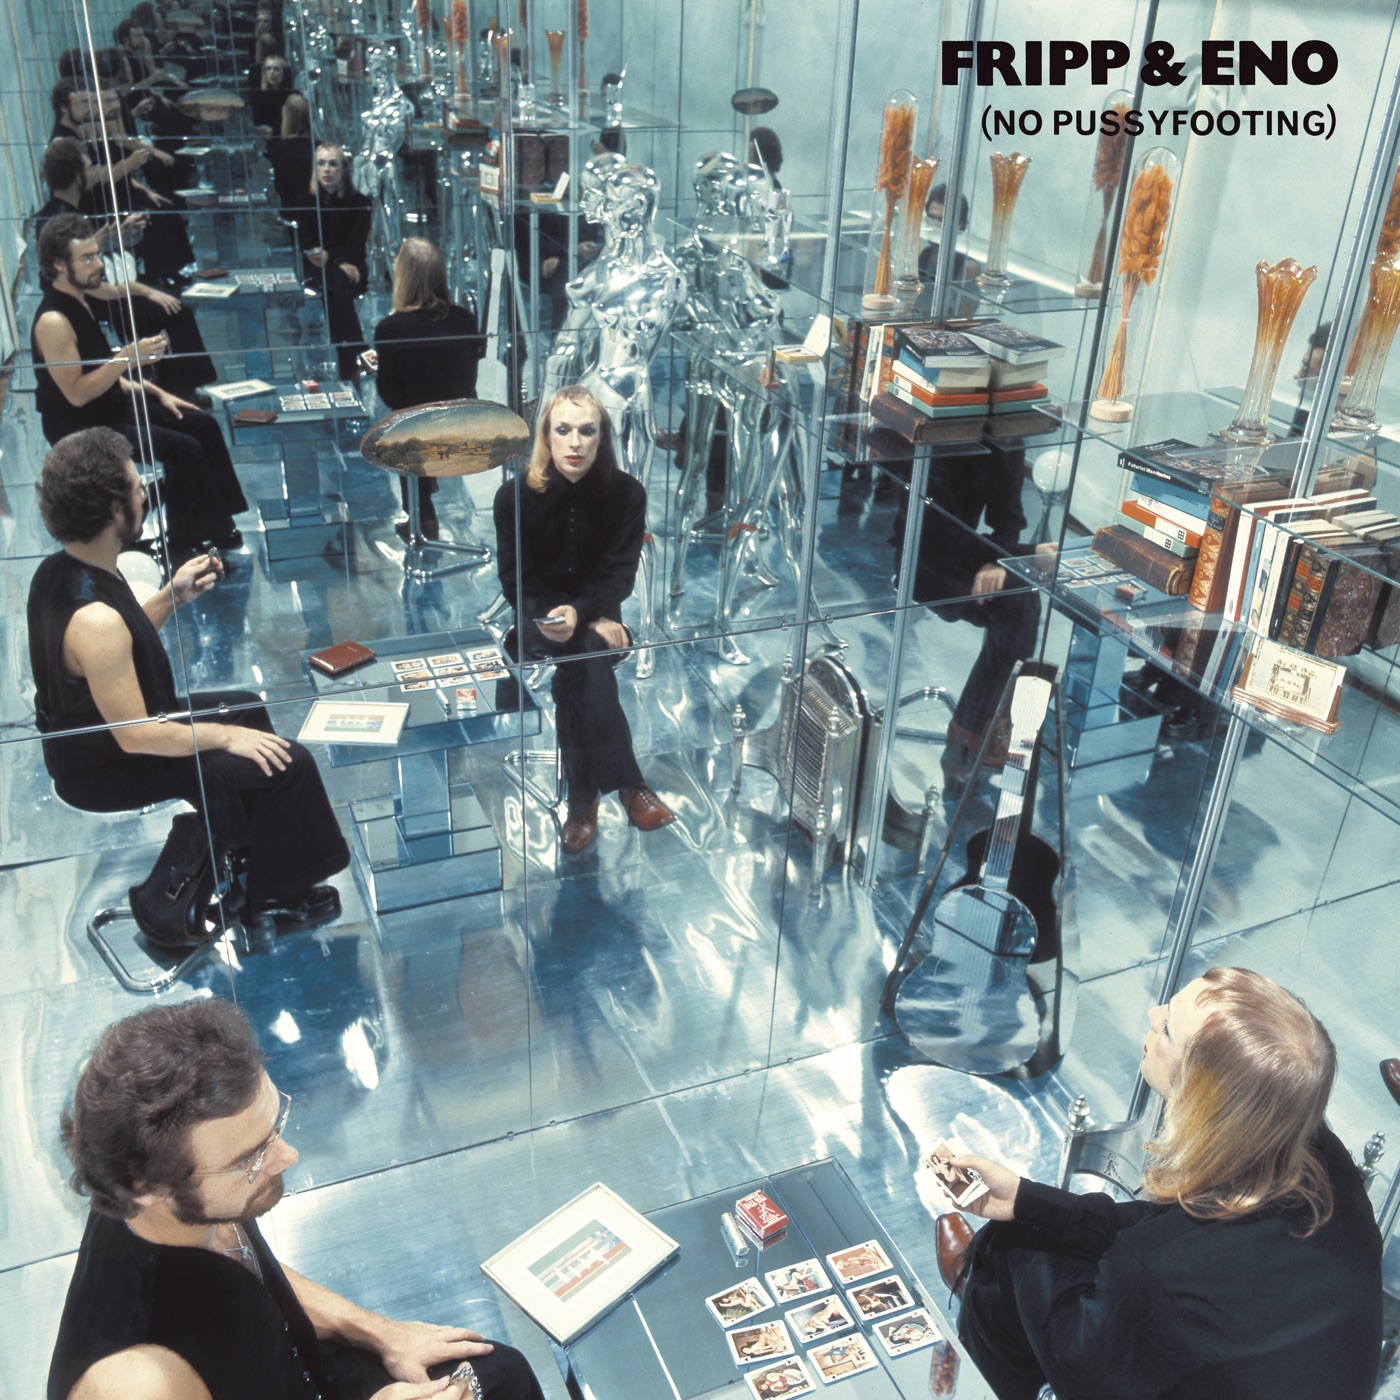 No Pussyfooting by Robert Fripp, Brian Eno